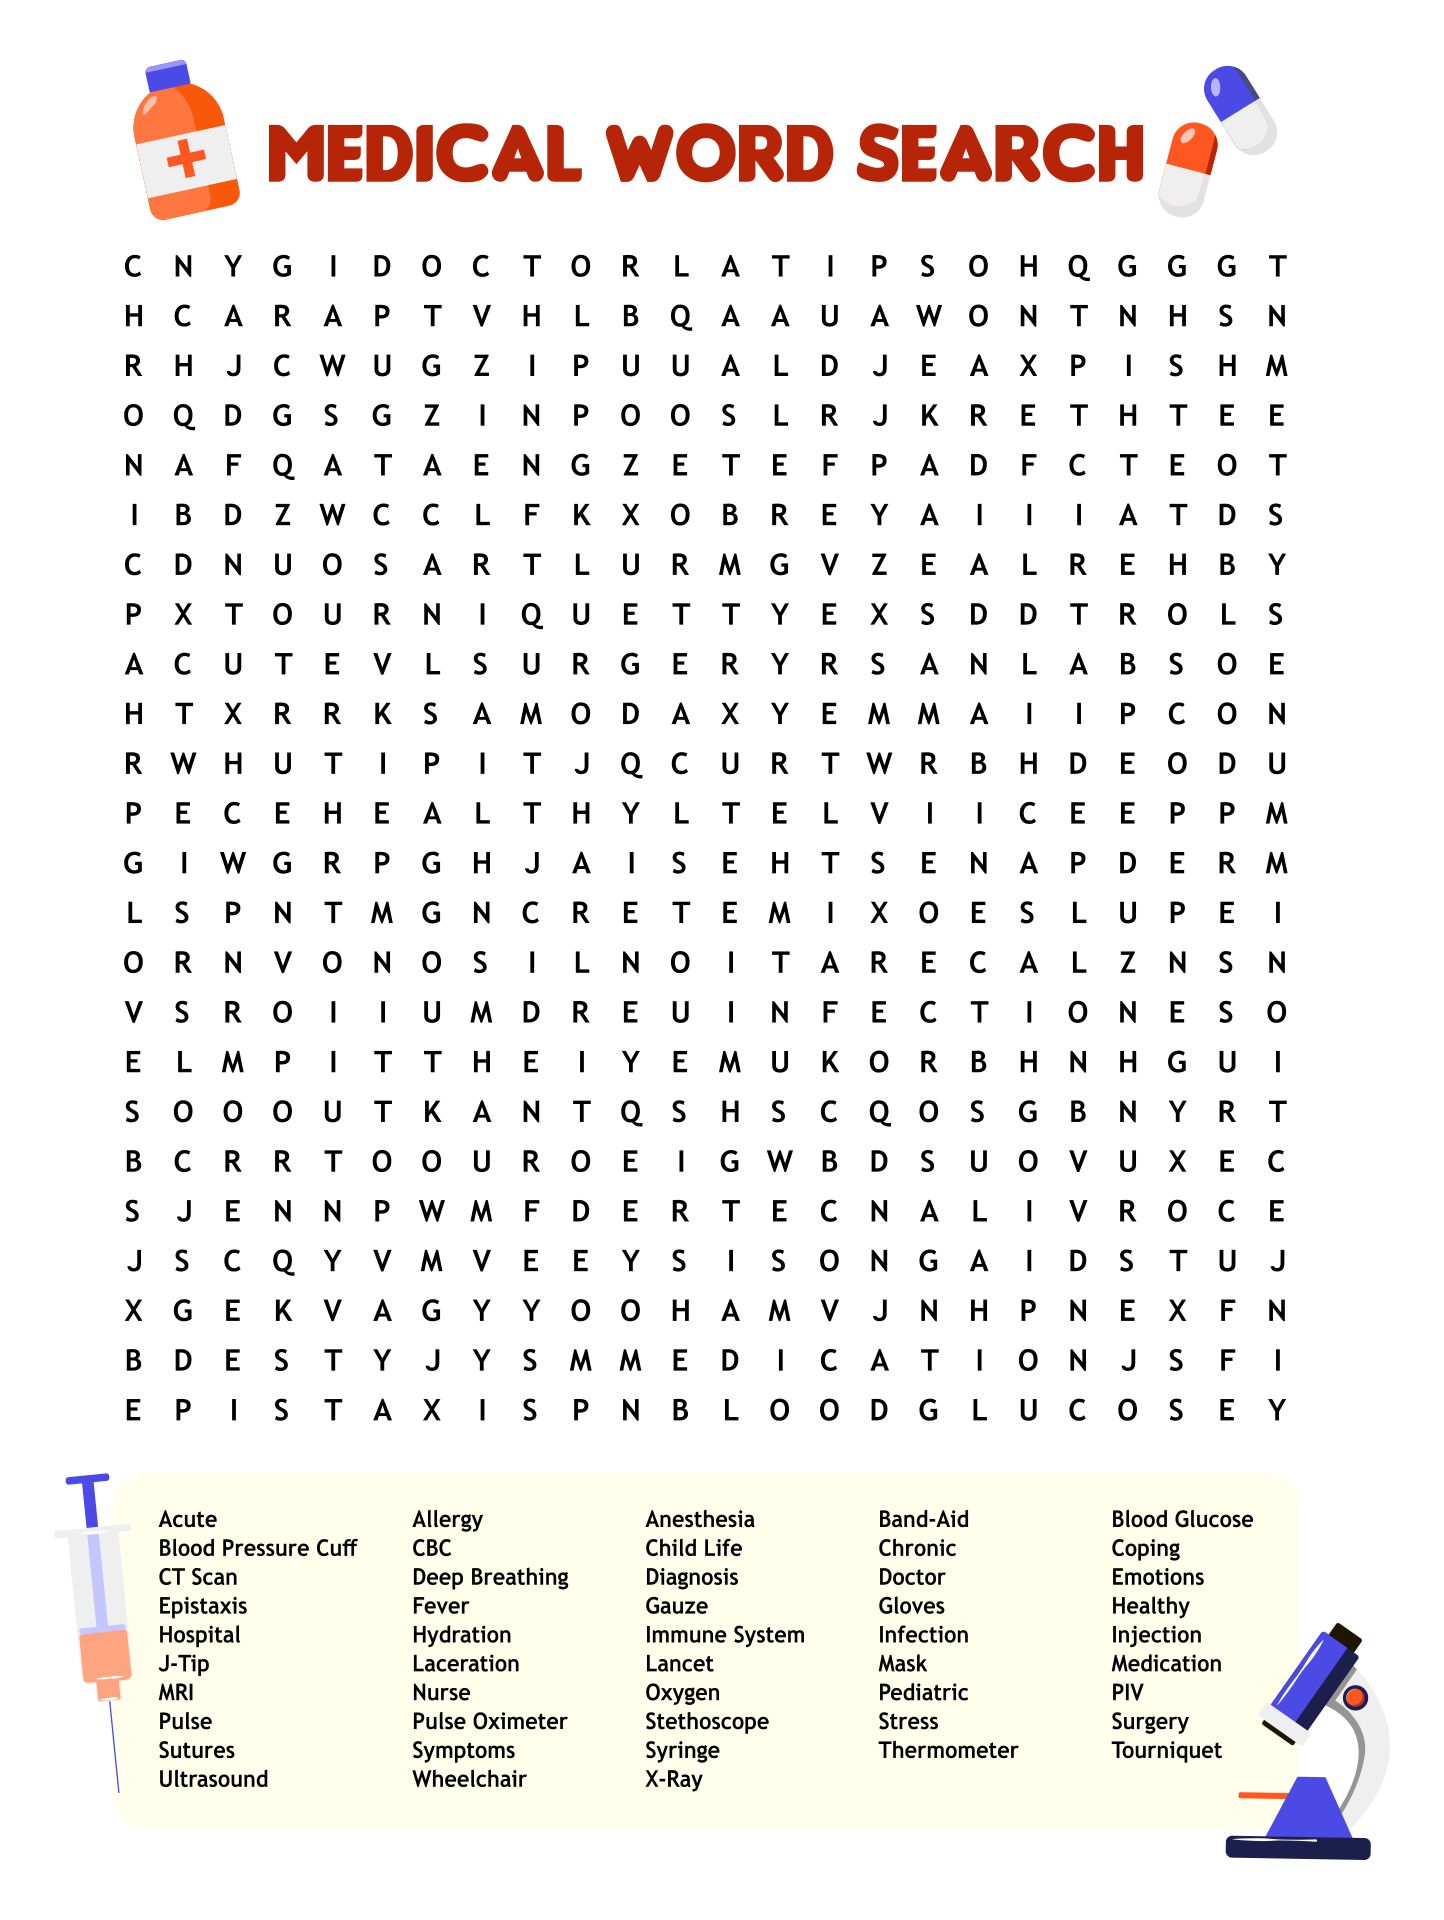 Printable Medical Terminology Crossword Puzzles